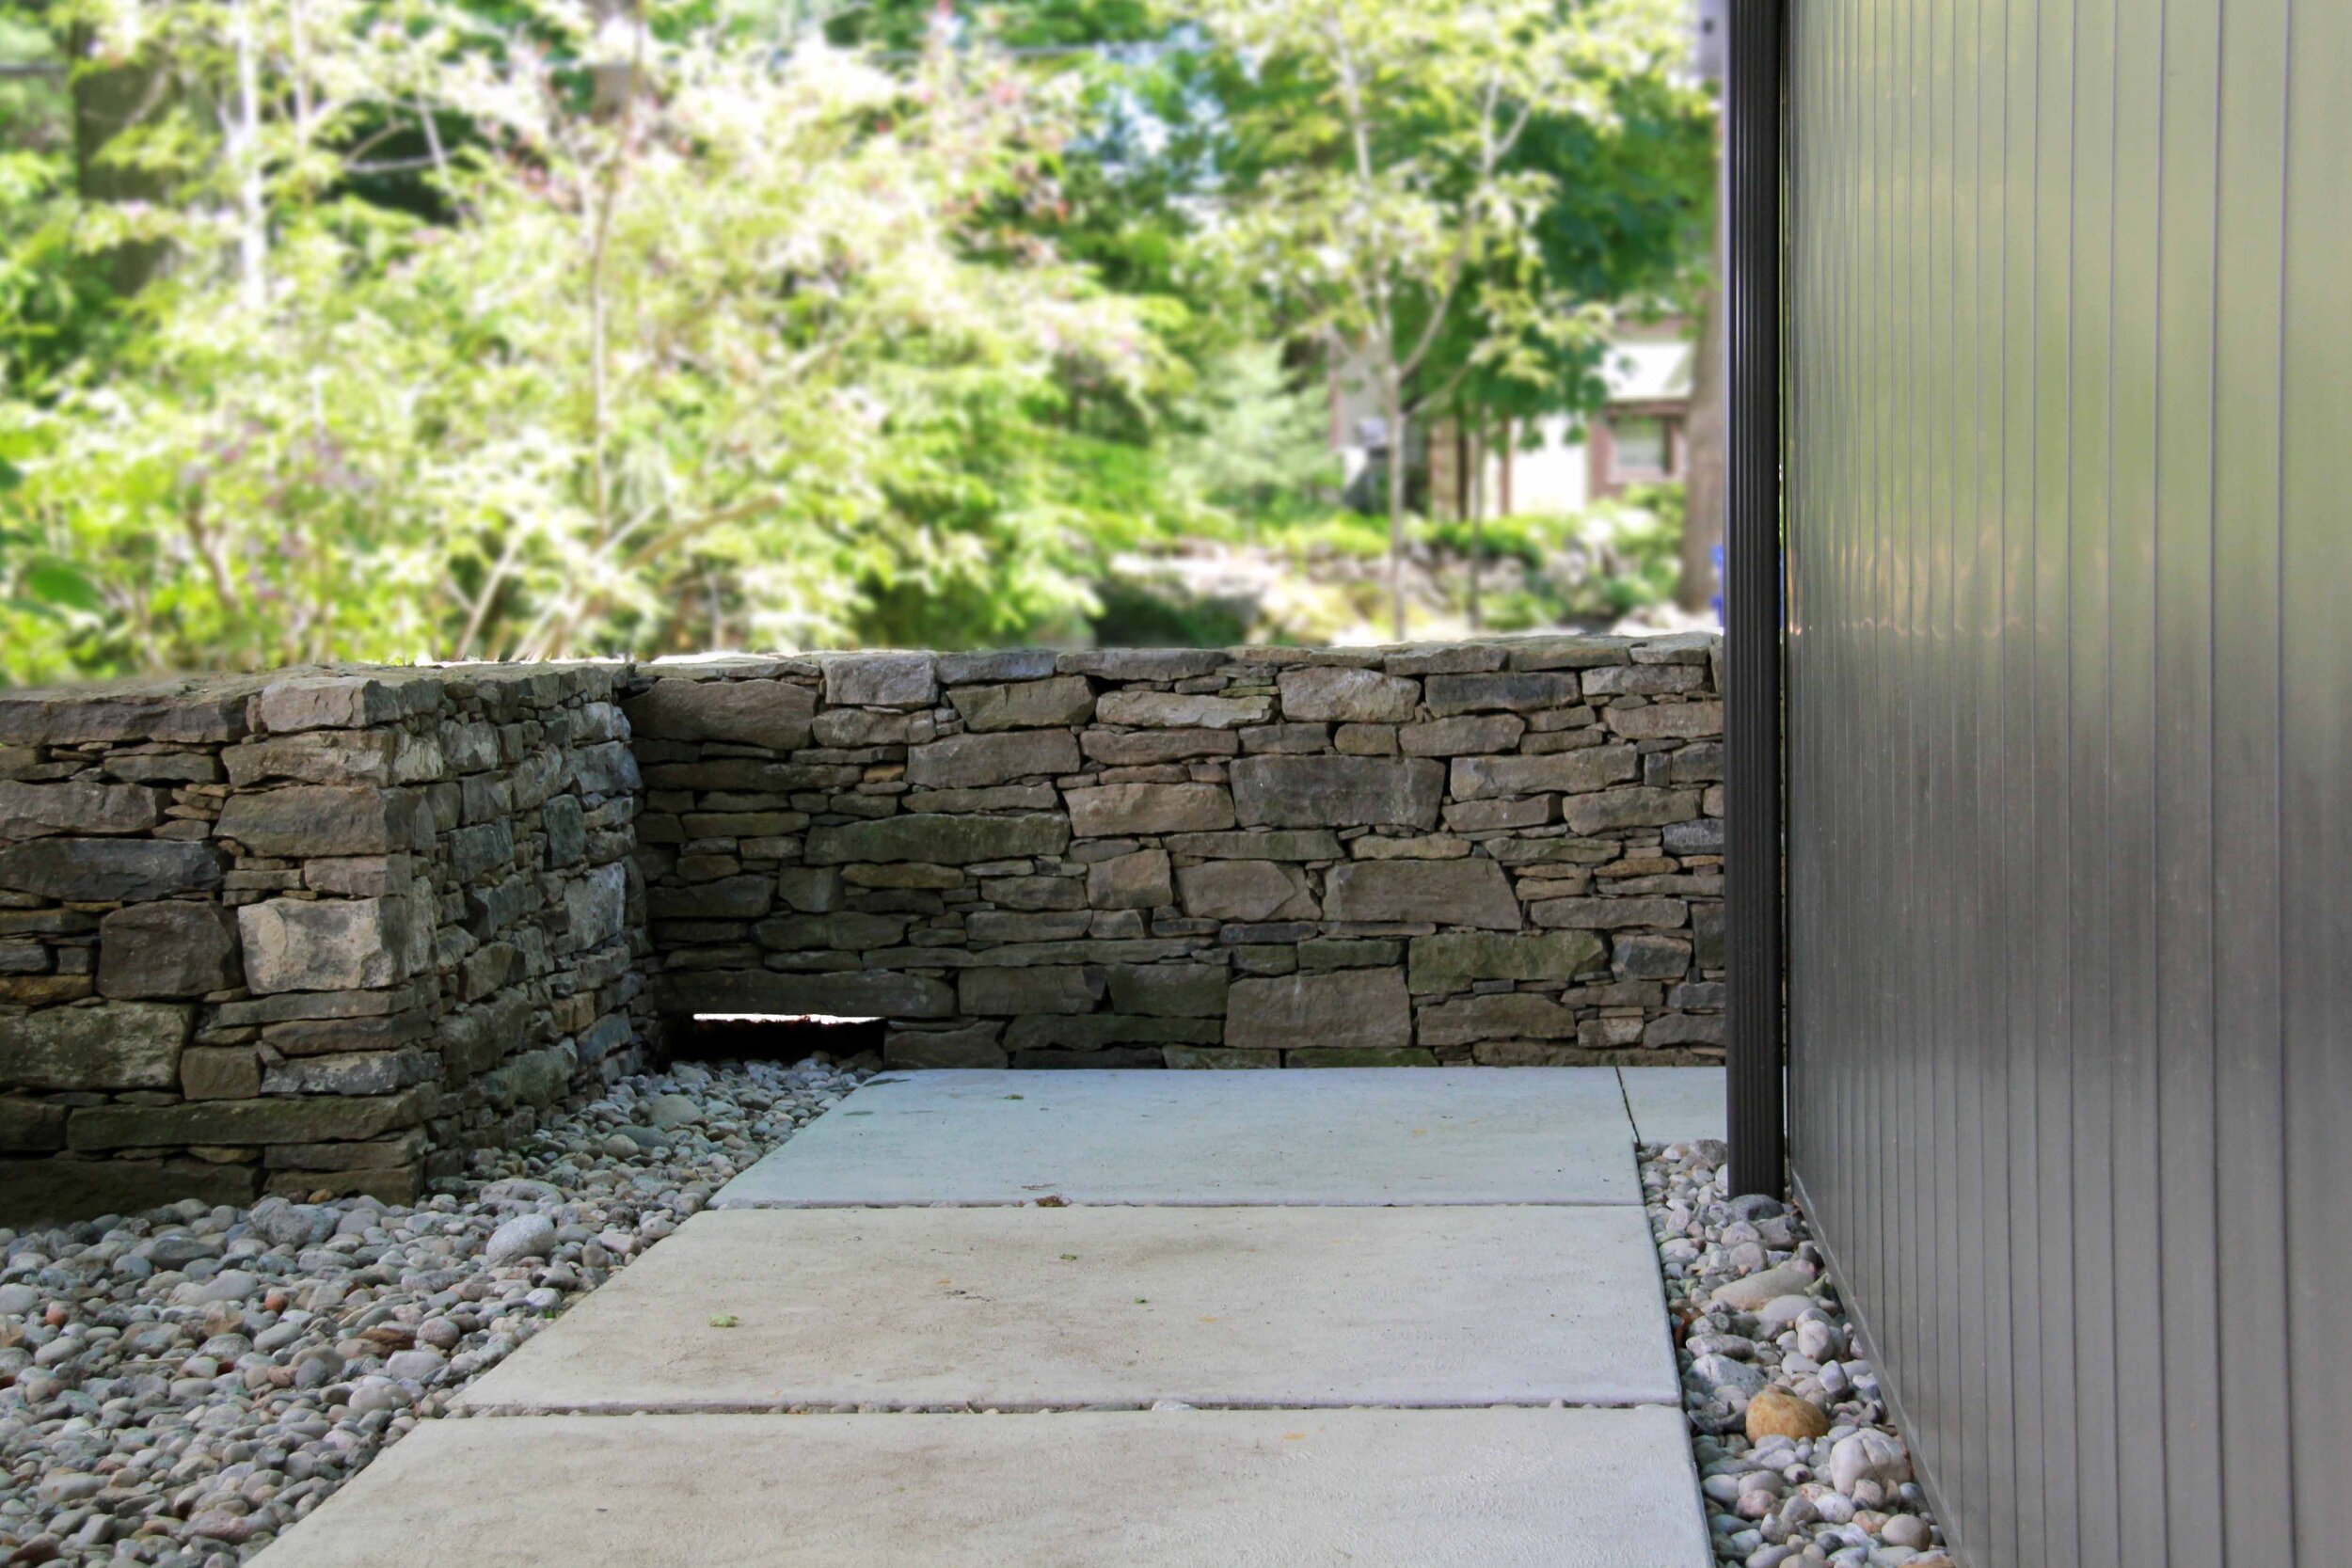 Dry laid stone-Modern home side entrance-Pebble stone-Conrete walway- Natural stone-Stone wall-Drainage-.jpg